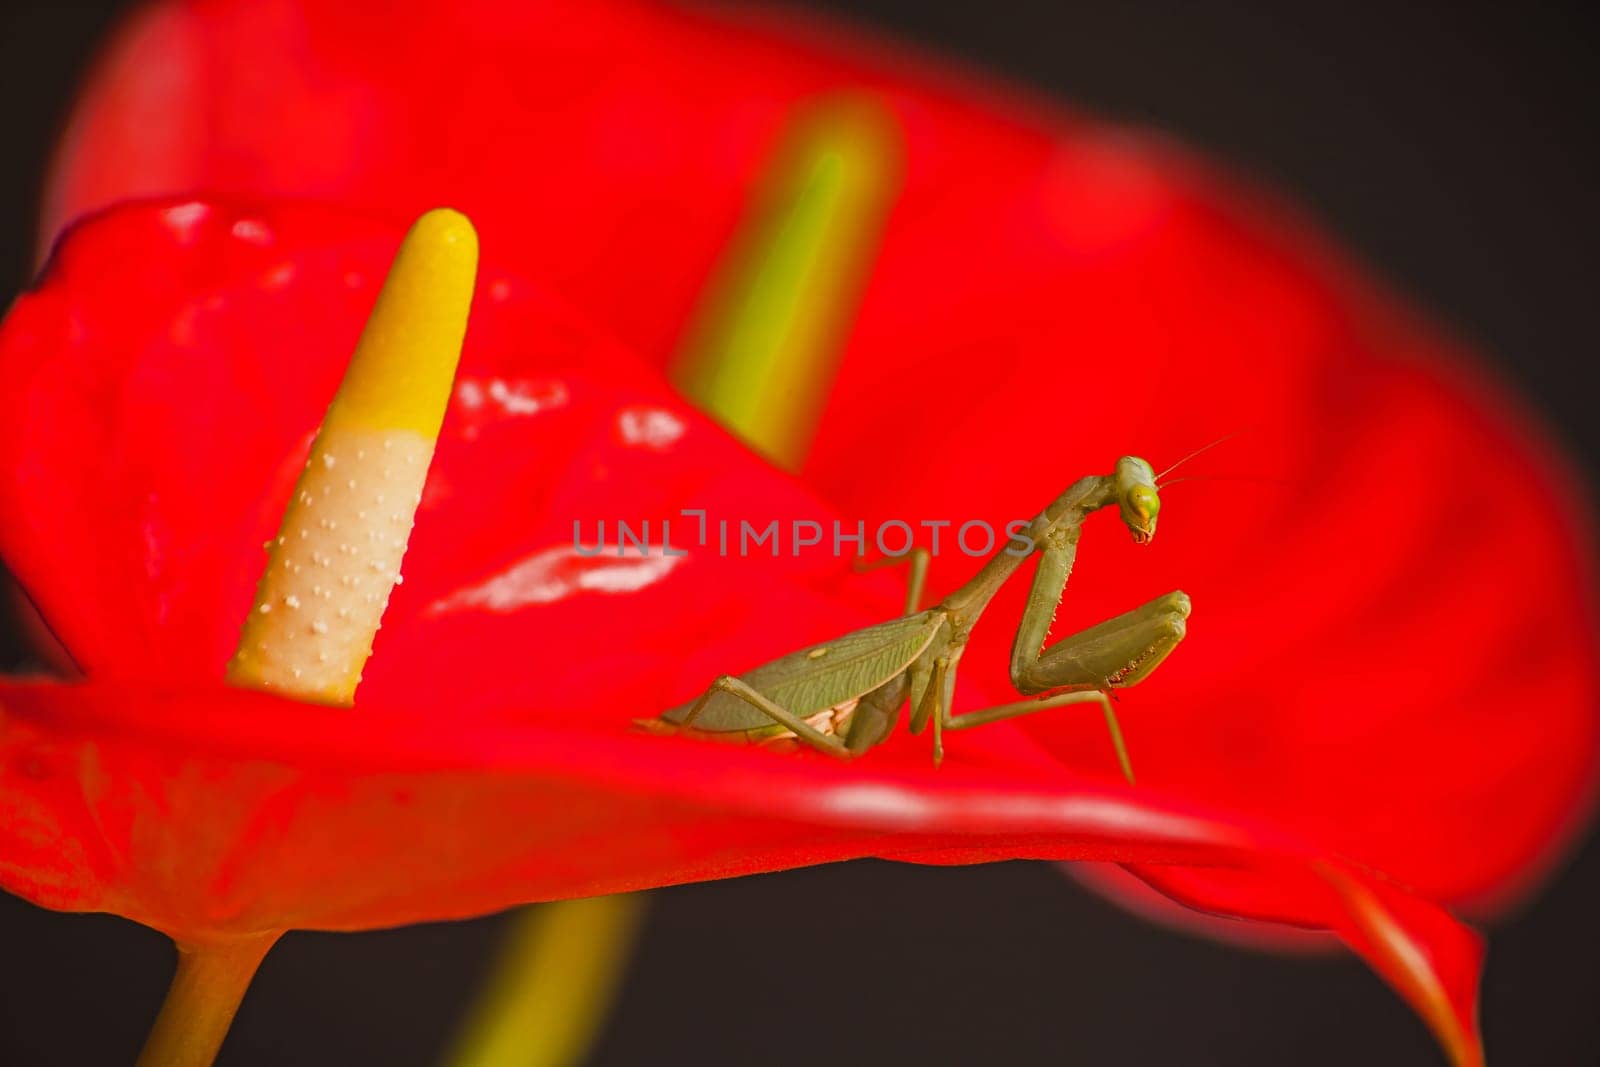 Green Mantid (Sphodromantis gastrica) on red Anthurium 10522 by kobus_peche